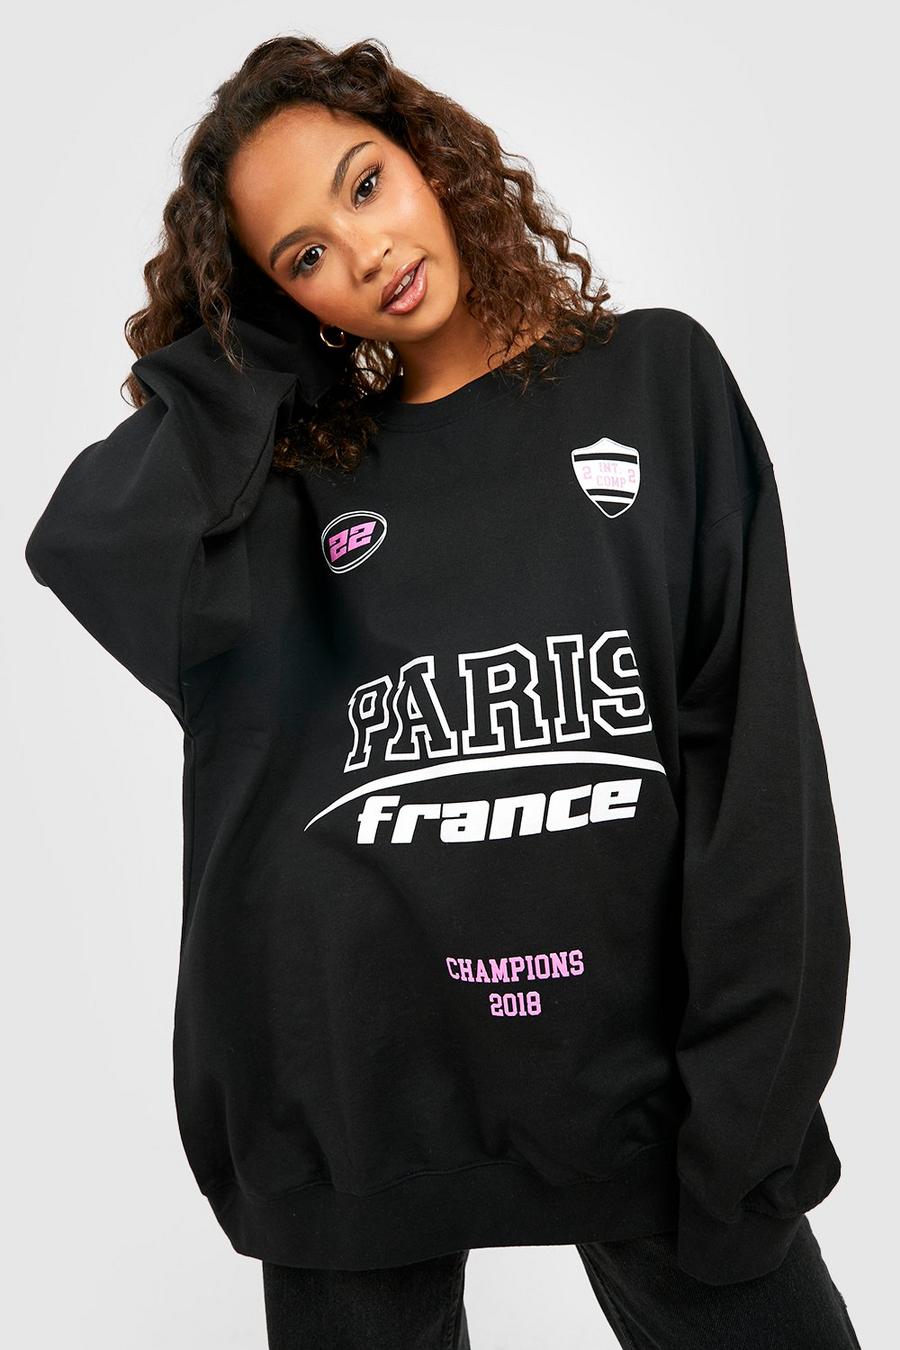 Black svart France Oversized Sweater 